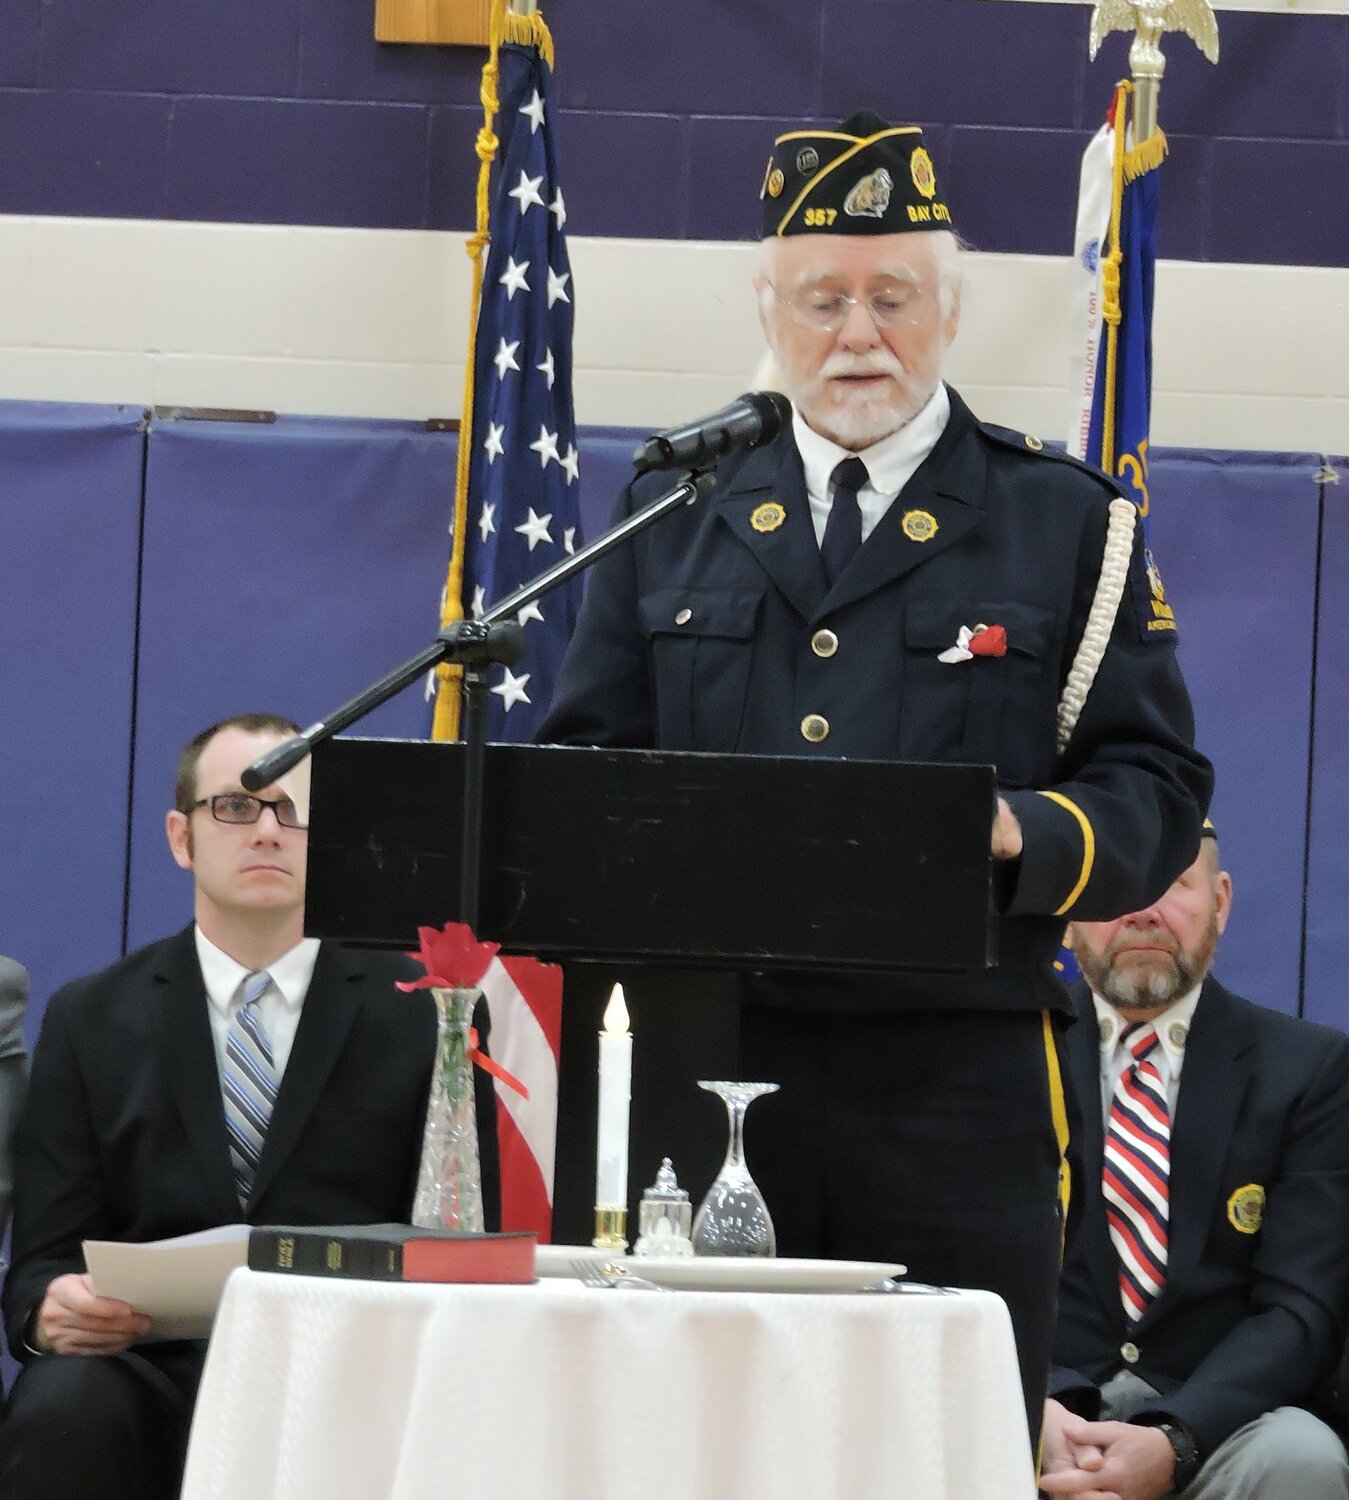 Mike Nelson reads the names of Pierce County deceased Korean War Era veterans at the Ellsworth Veterans Day ceremony Nov. 10.